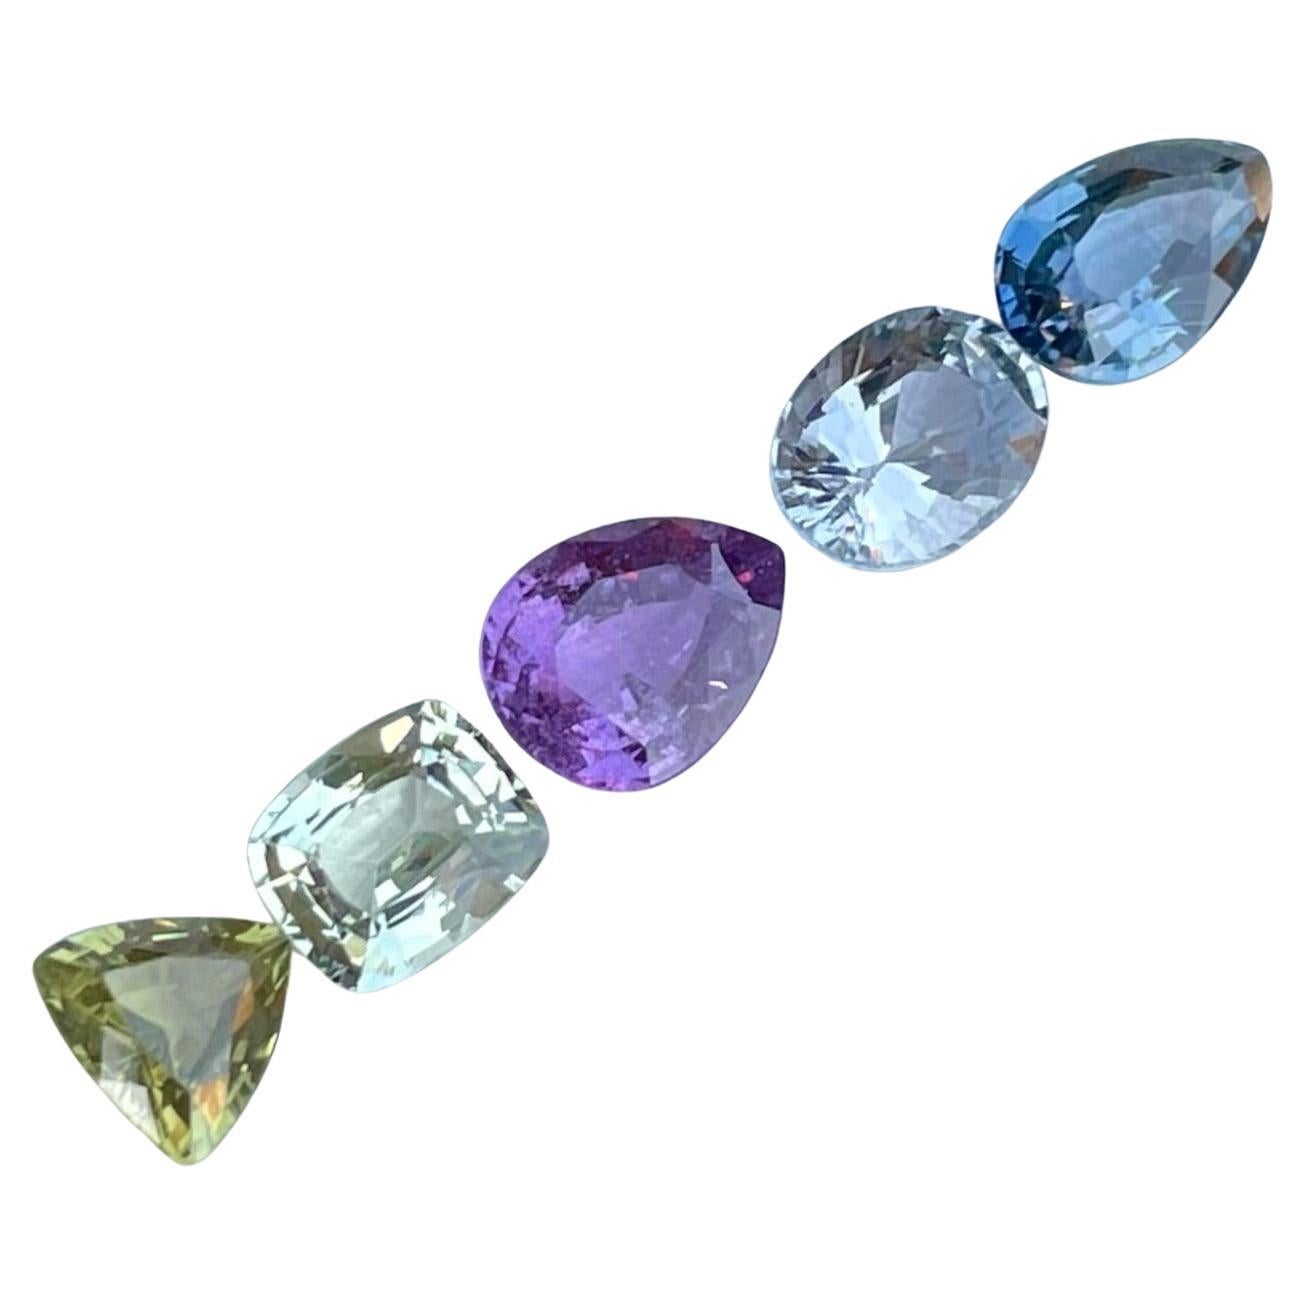 6.04 carats Colorful Stones Loose Sapphire Lot Natural Gemstones From Sri Lanka en vente